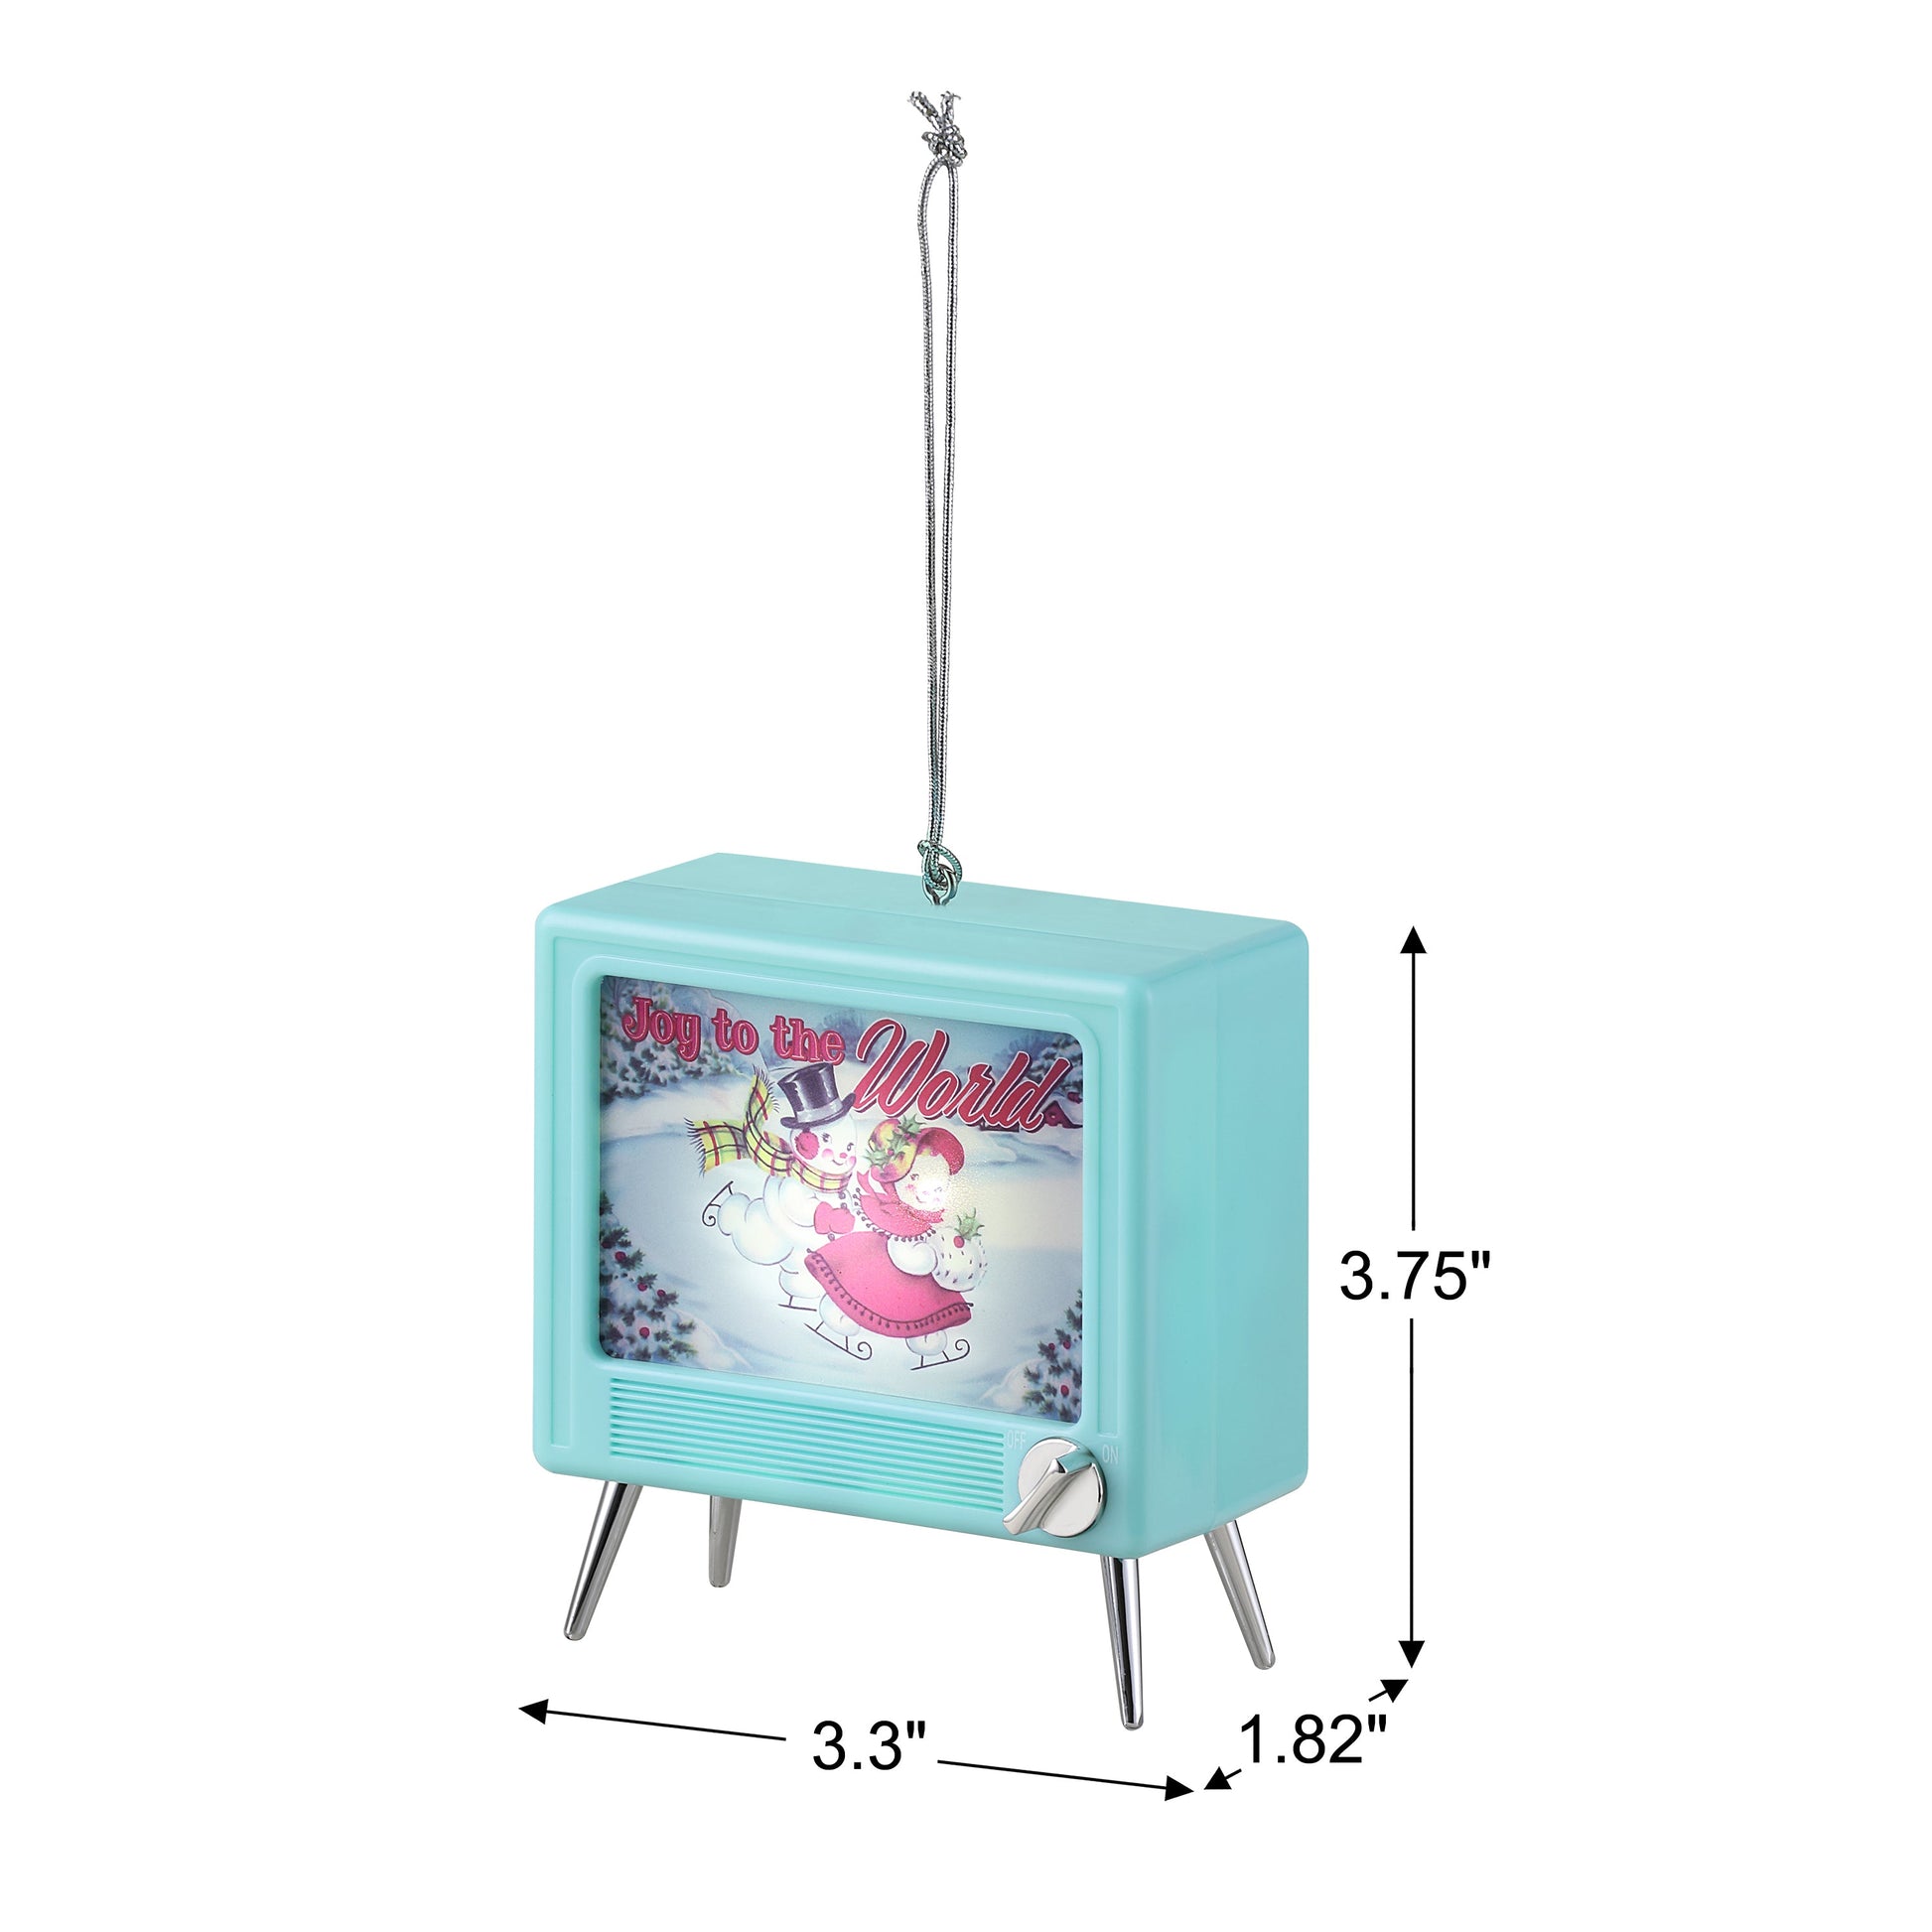 3.75" Musical LED TV Ornament - Teal - Mr. Christmas